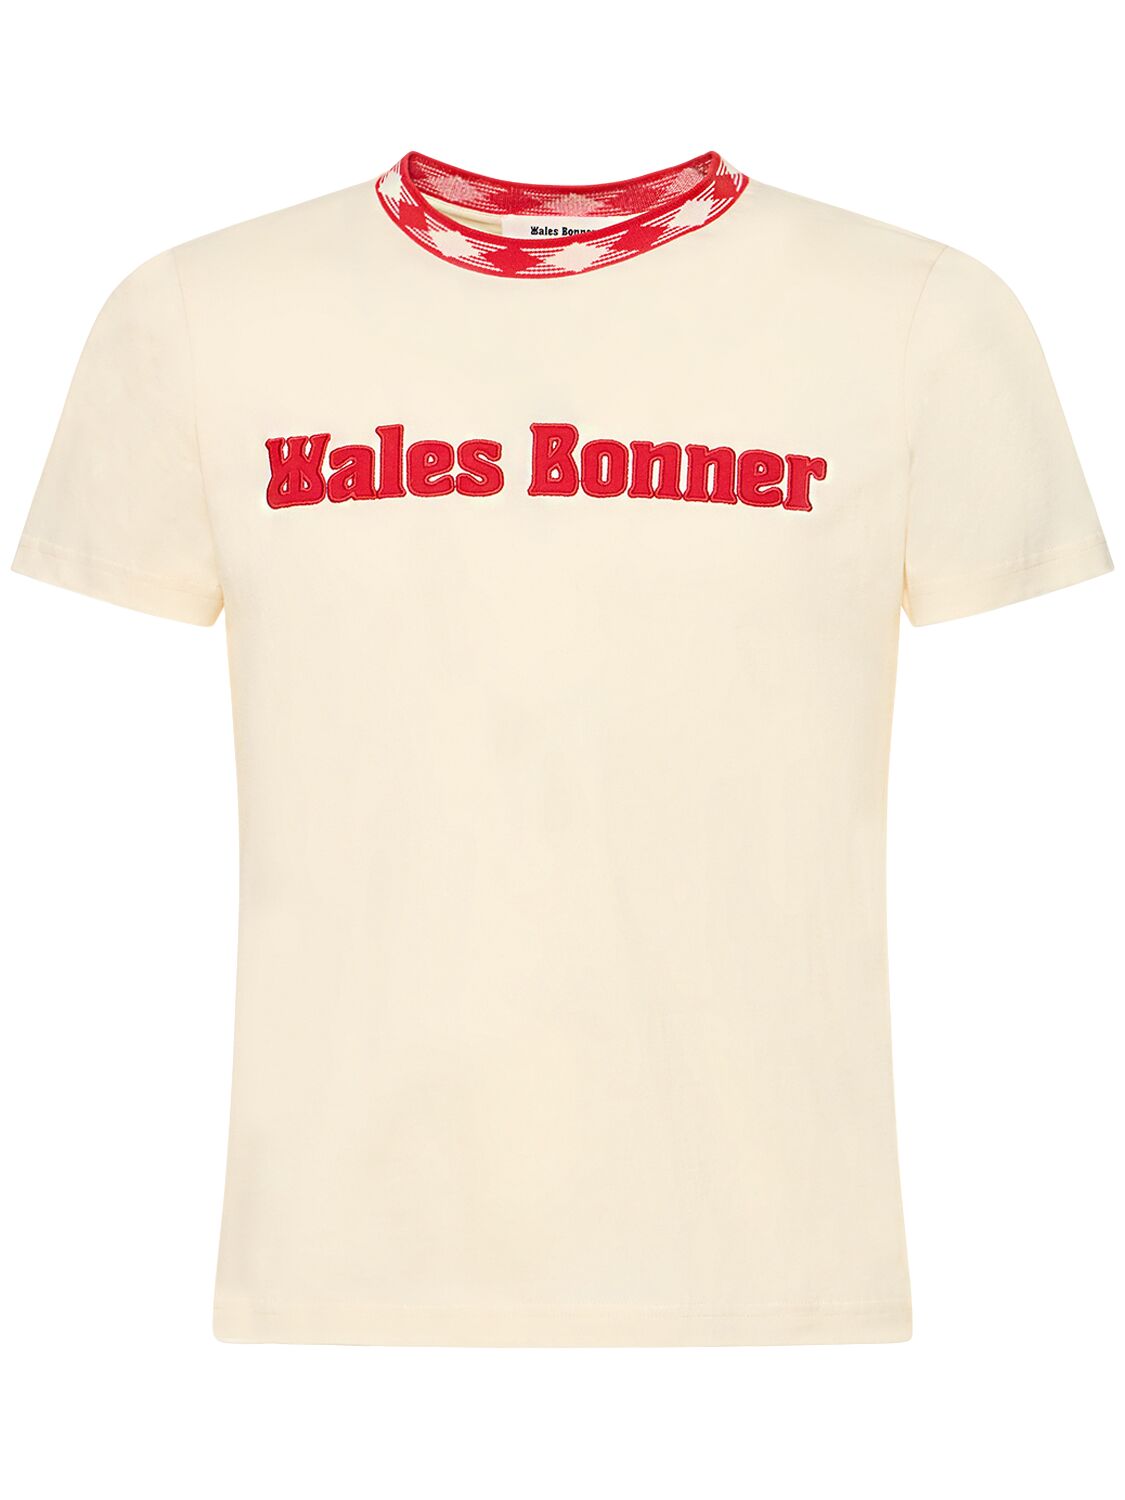 ORIGINAL WALES BONNER LOGO T恤